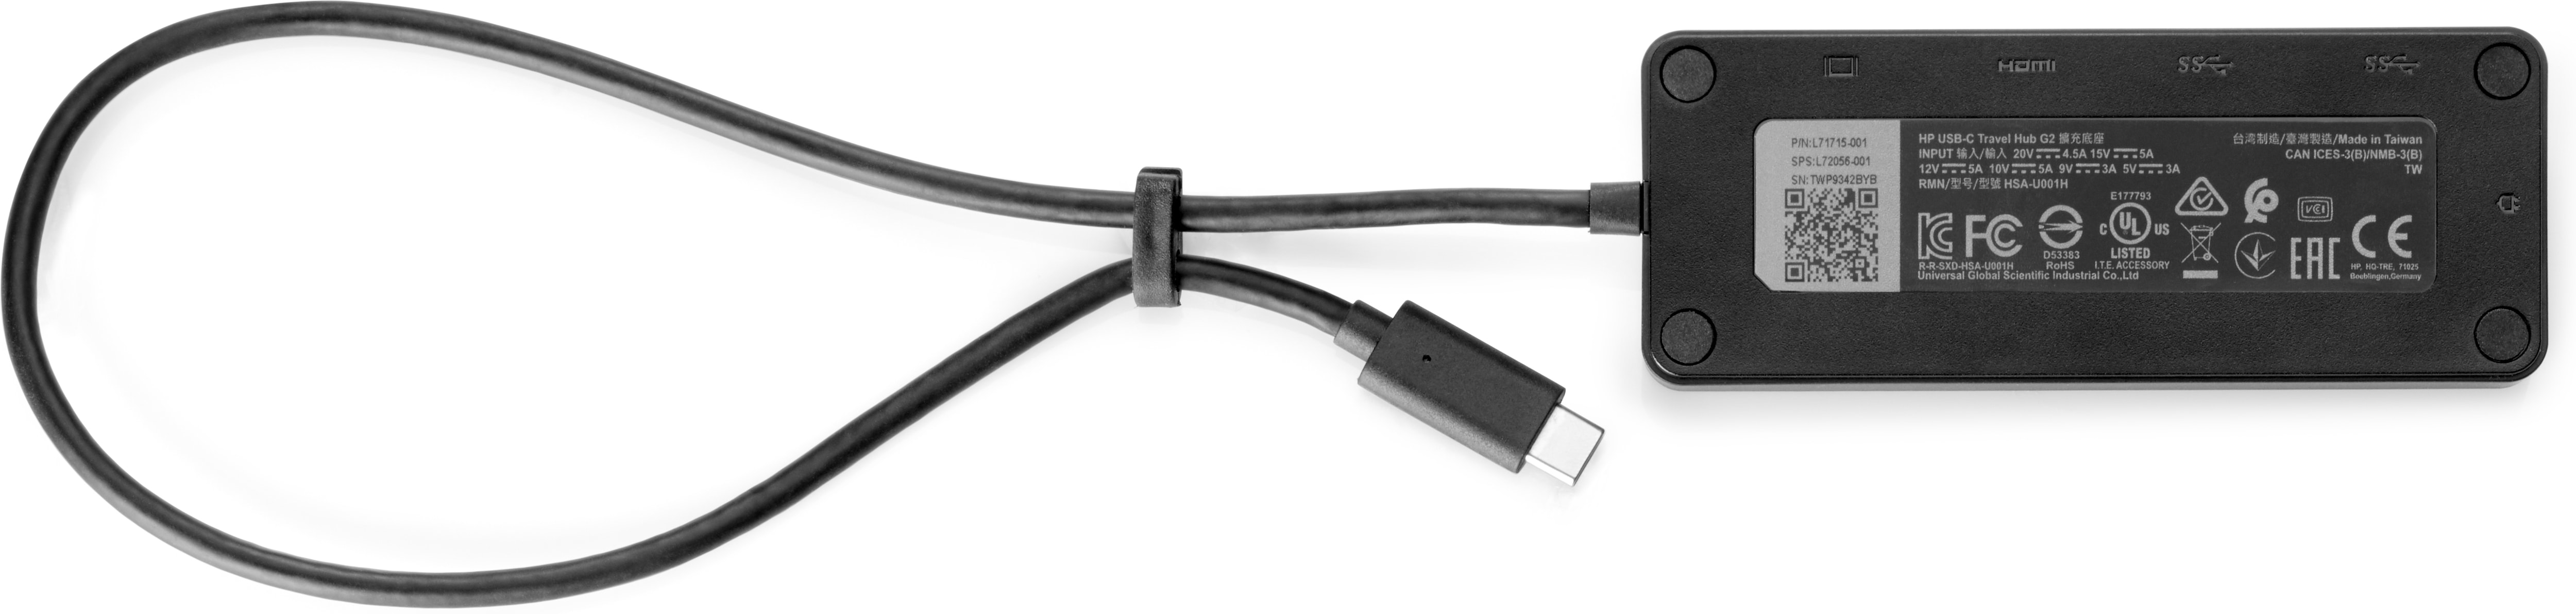 HP USB-C Travel Hub G2 Verkabelt USB 3.2 Gen 1 (3.1 Gen 1) Type-C Schwarz 87197220_5785459550